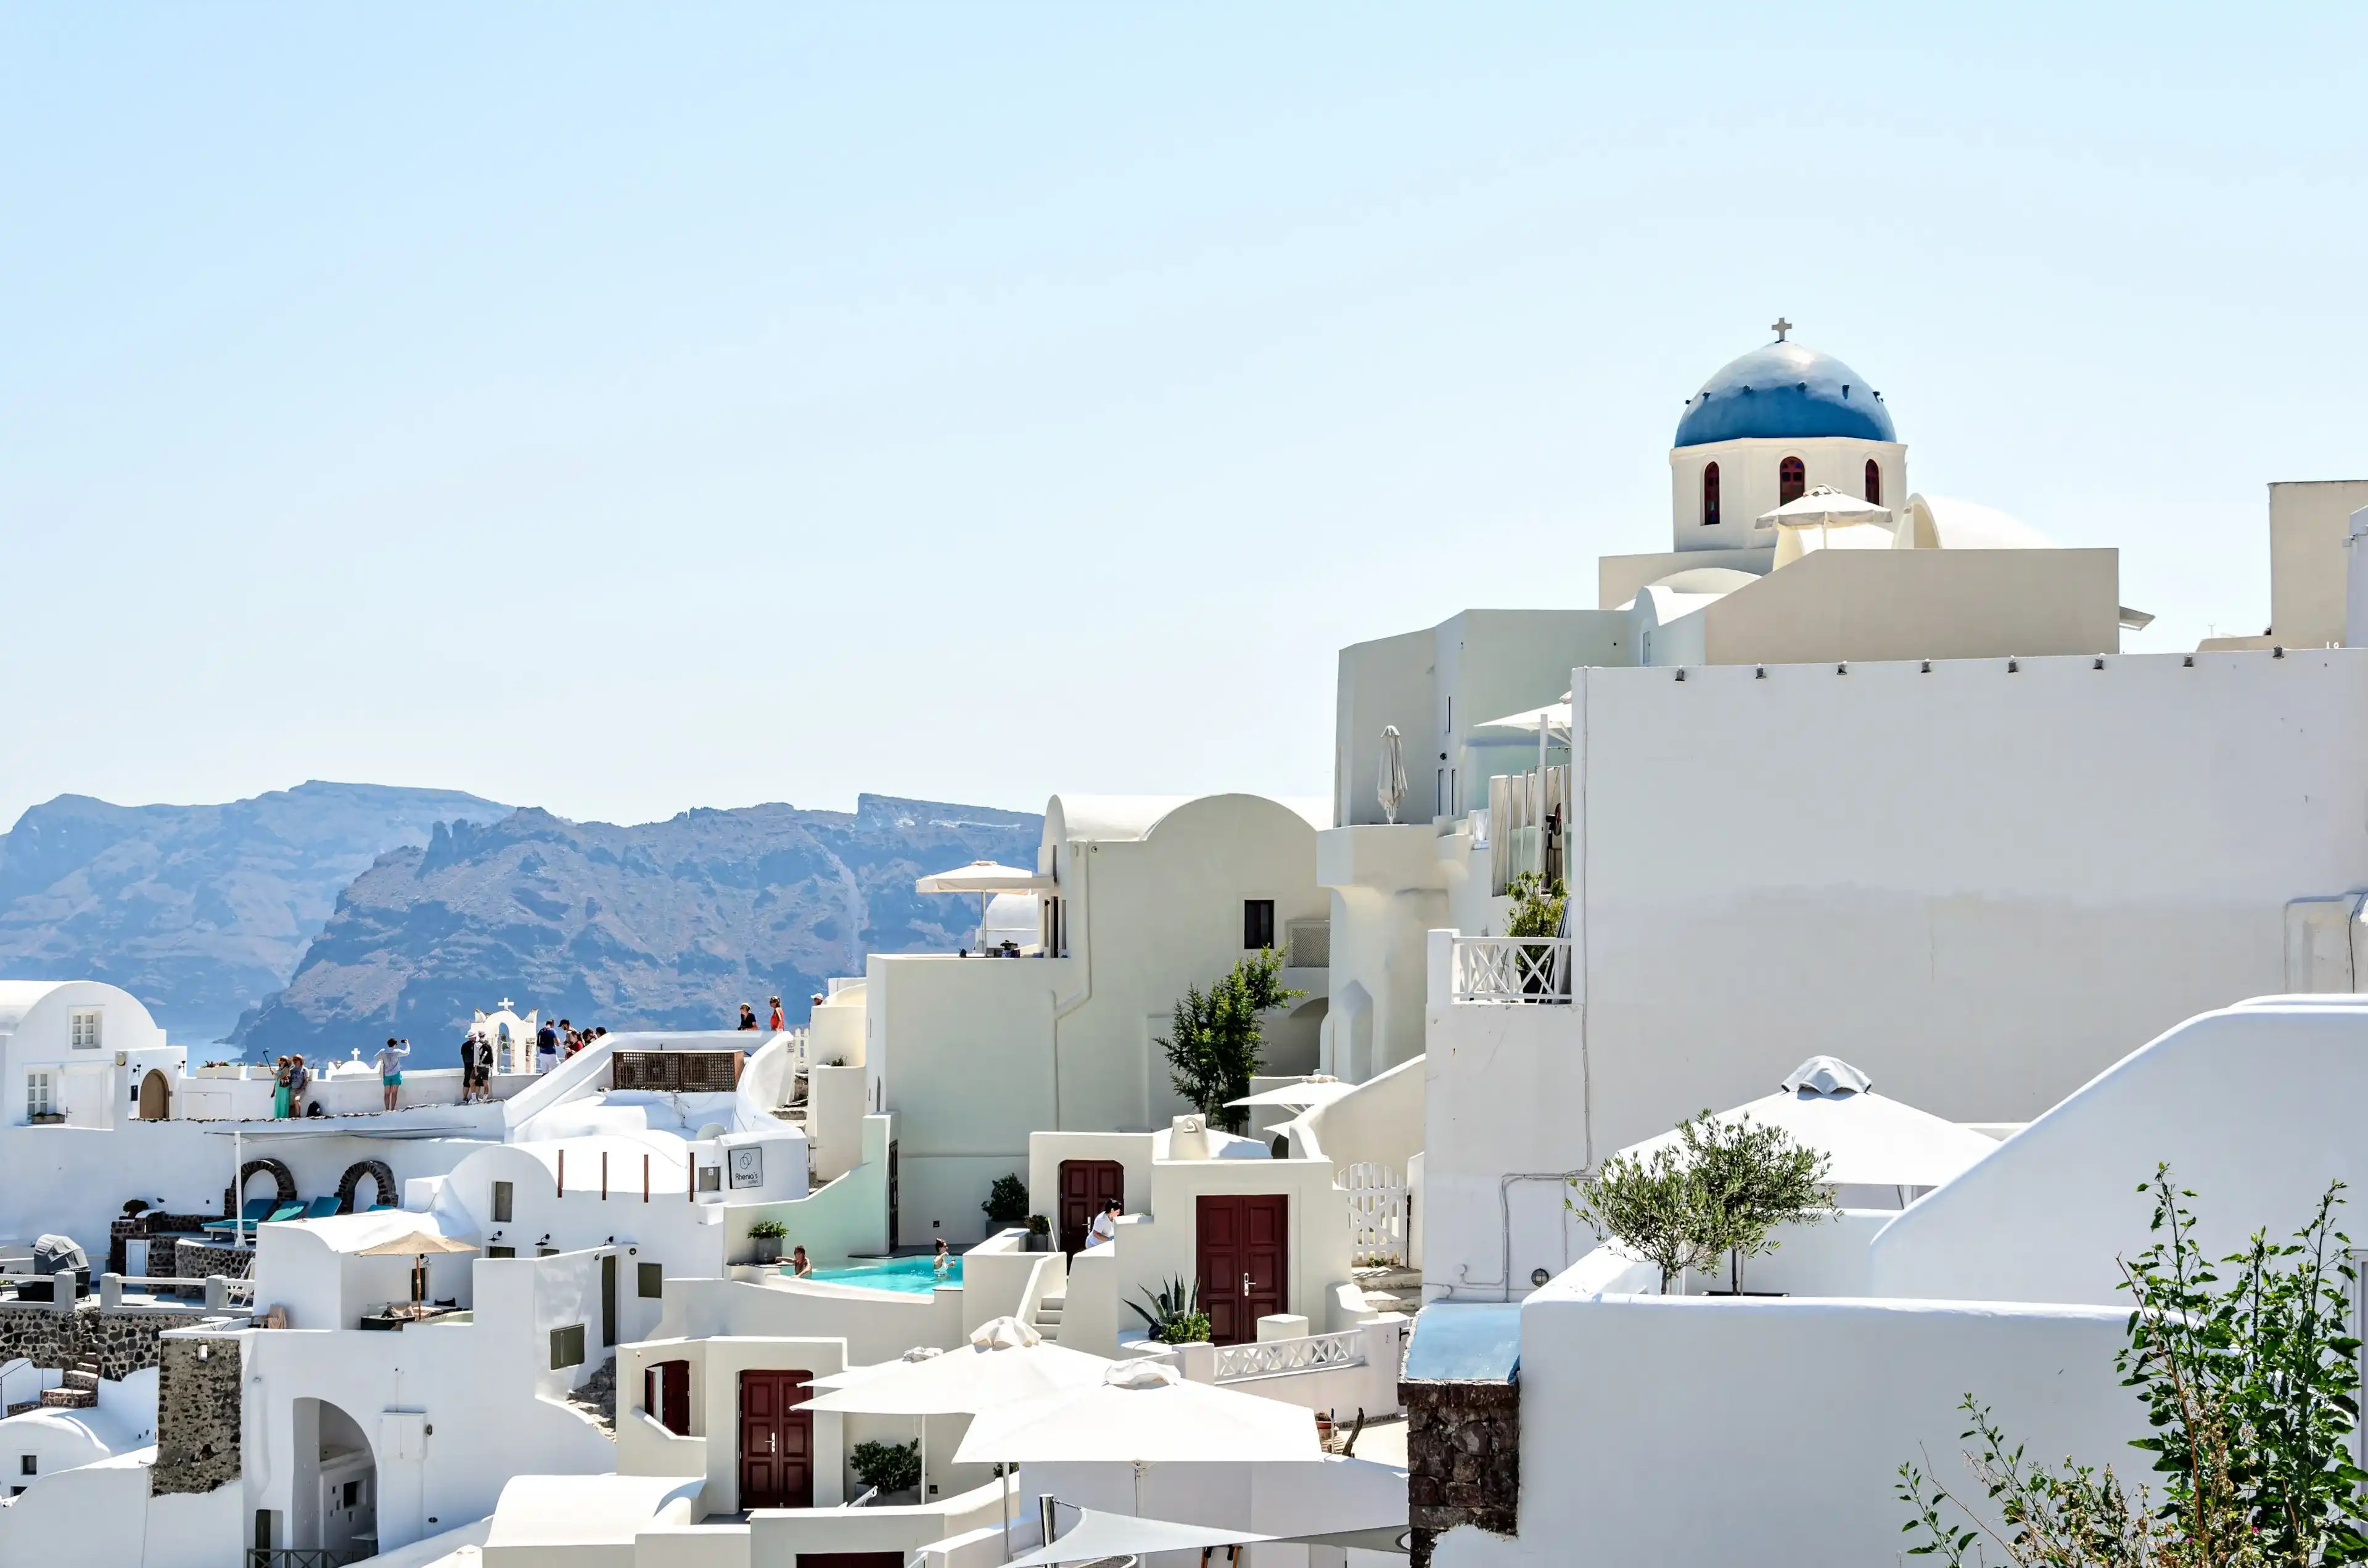 South Aegean hotels. Best hotels in South Aegean, Greece